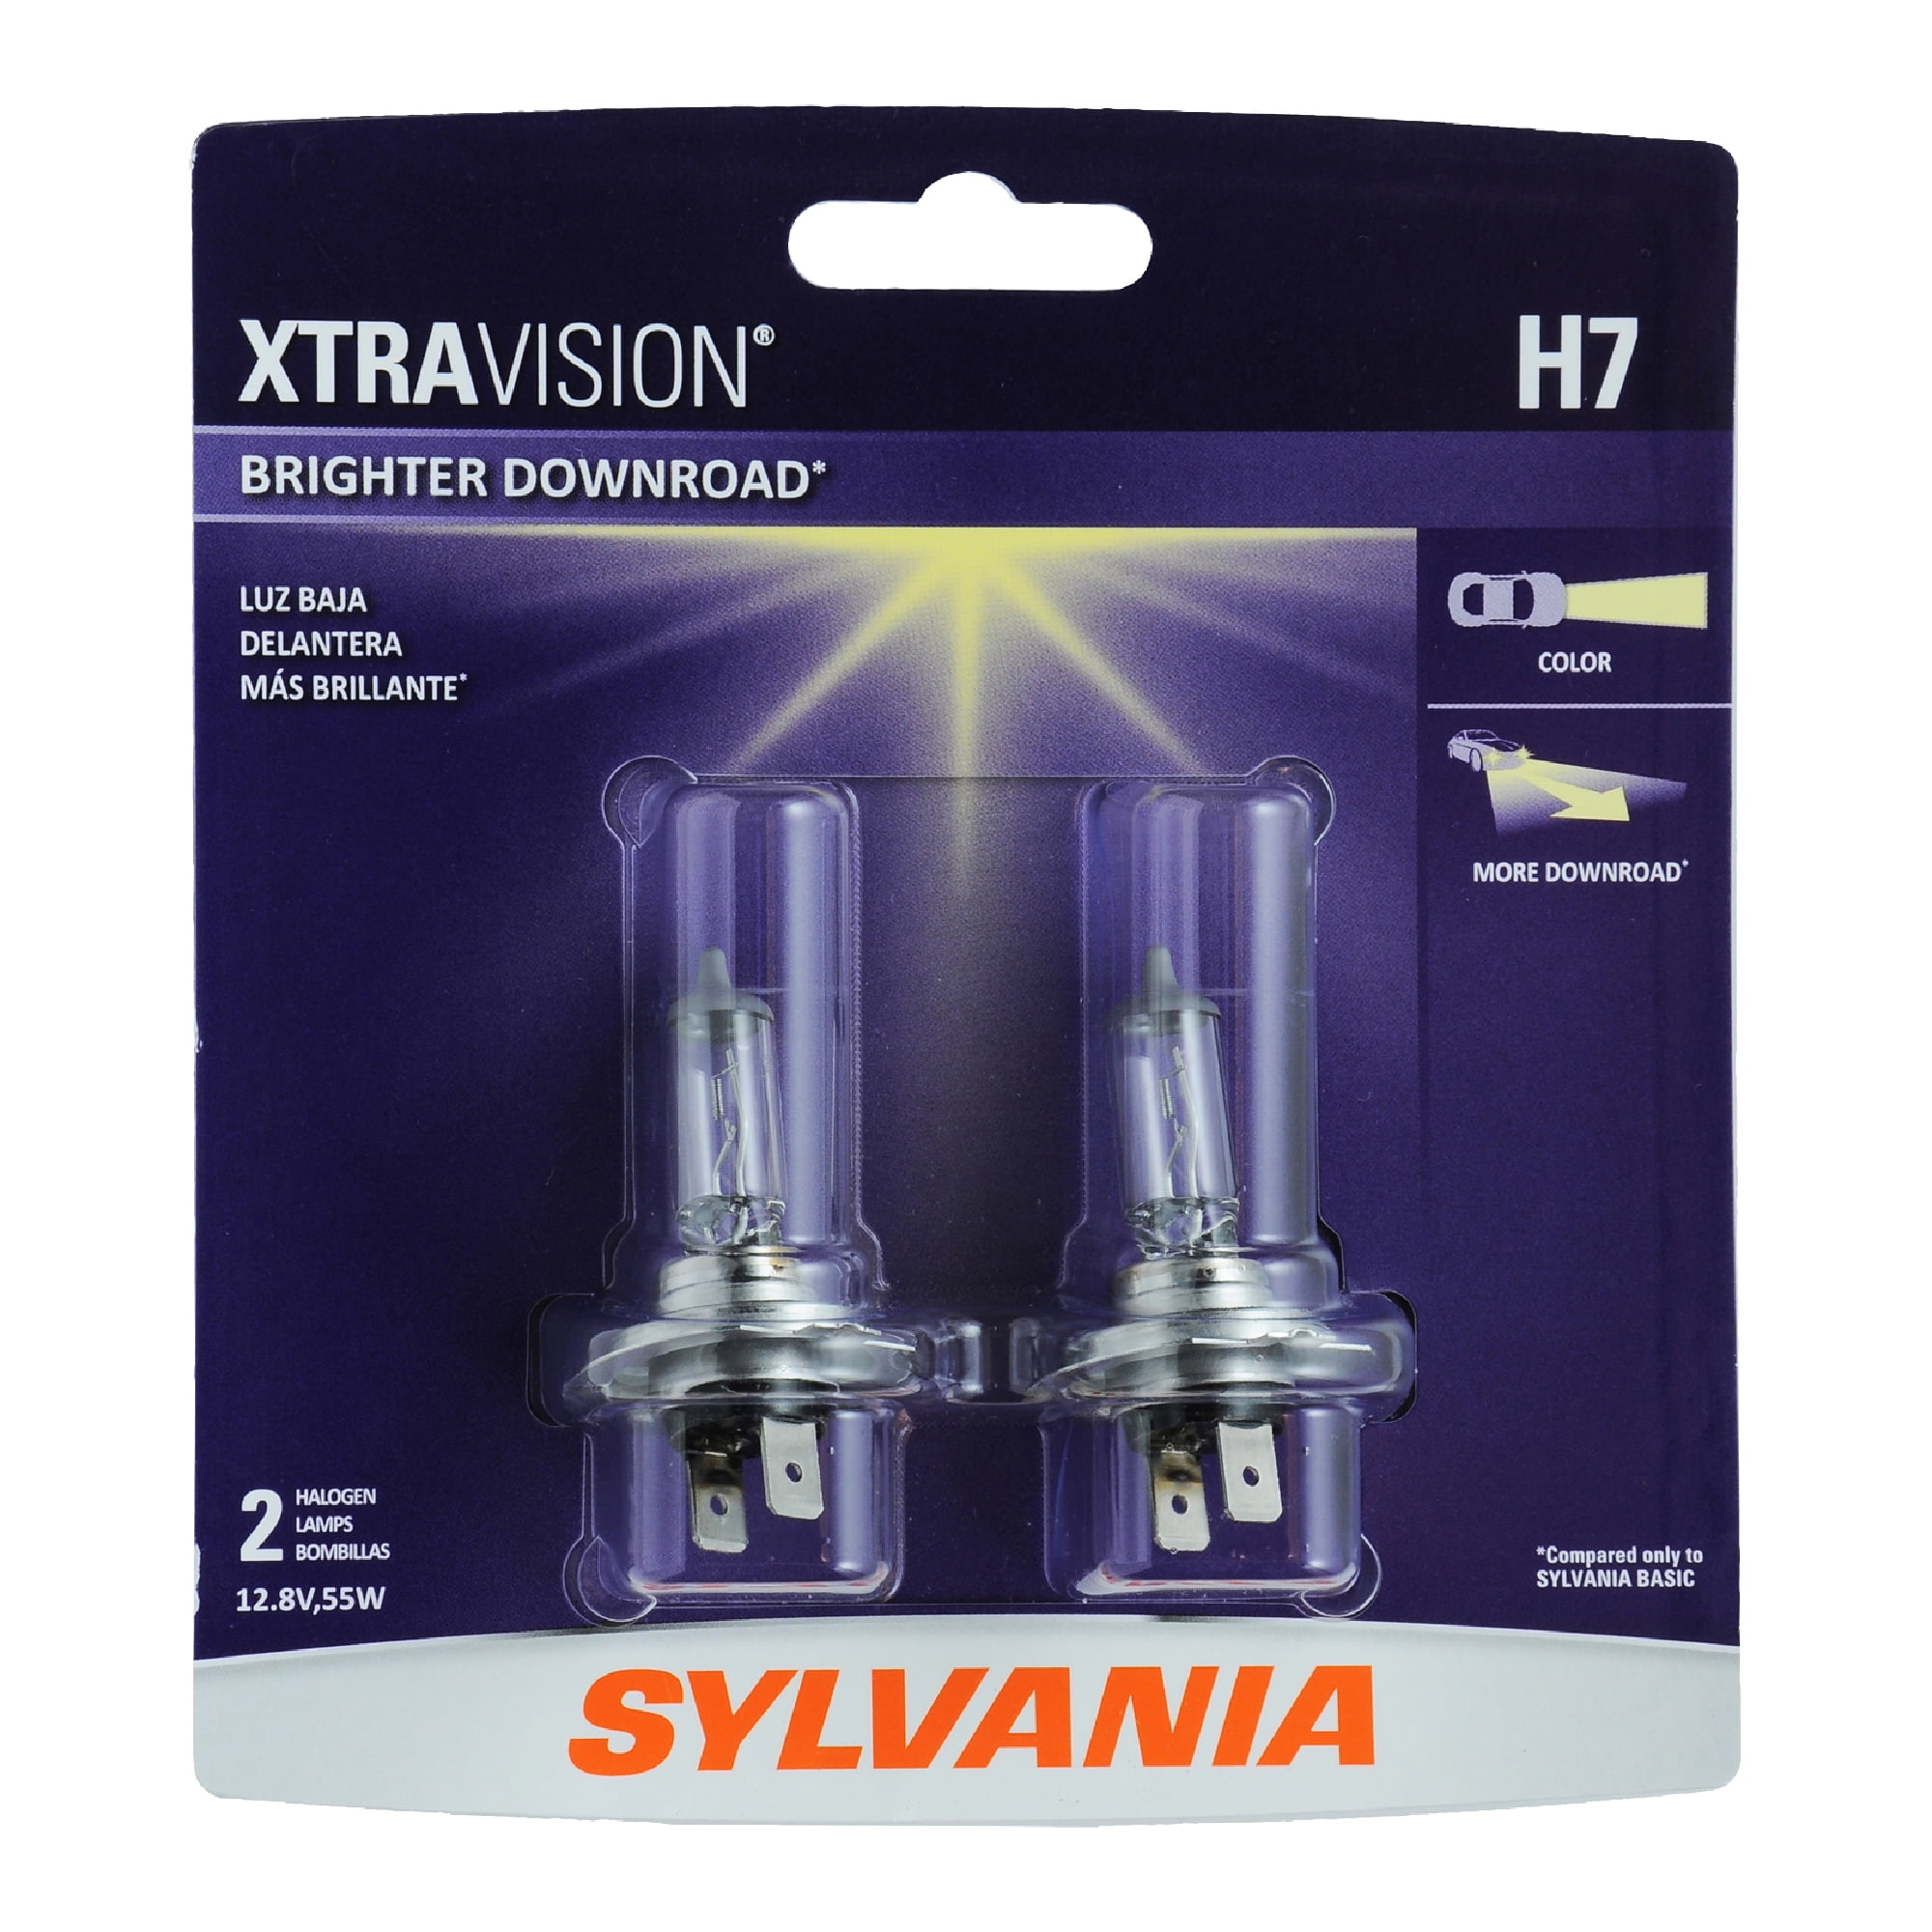 Sylvania H7 XtraVision Halogen Headlight Bulb, Pack of 2